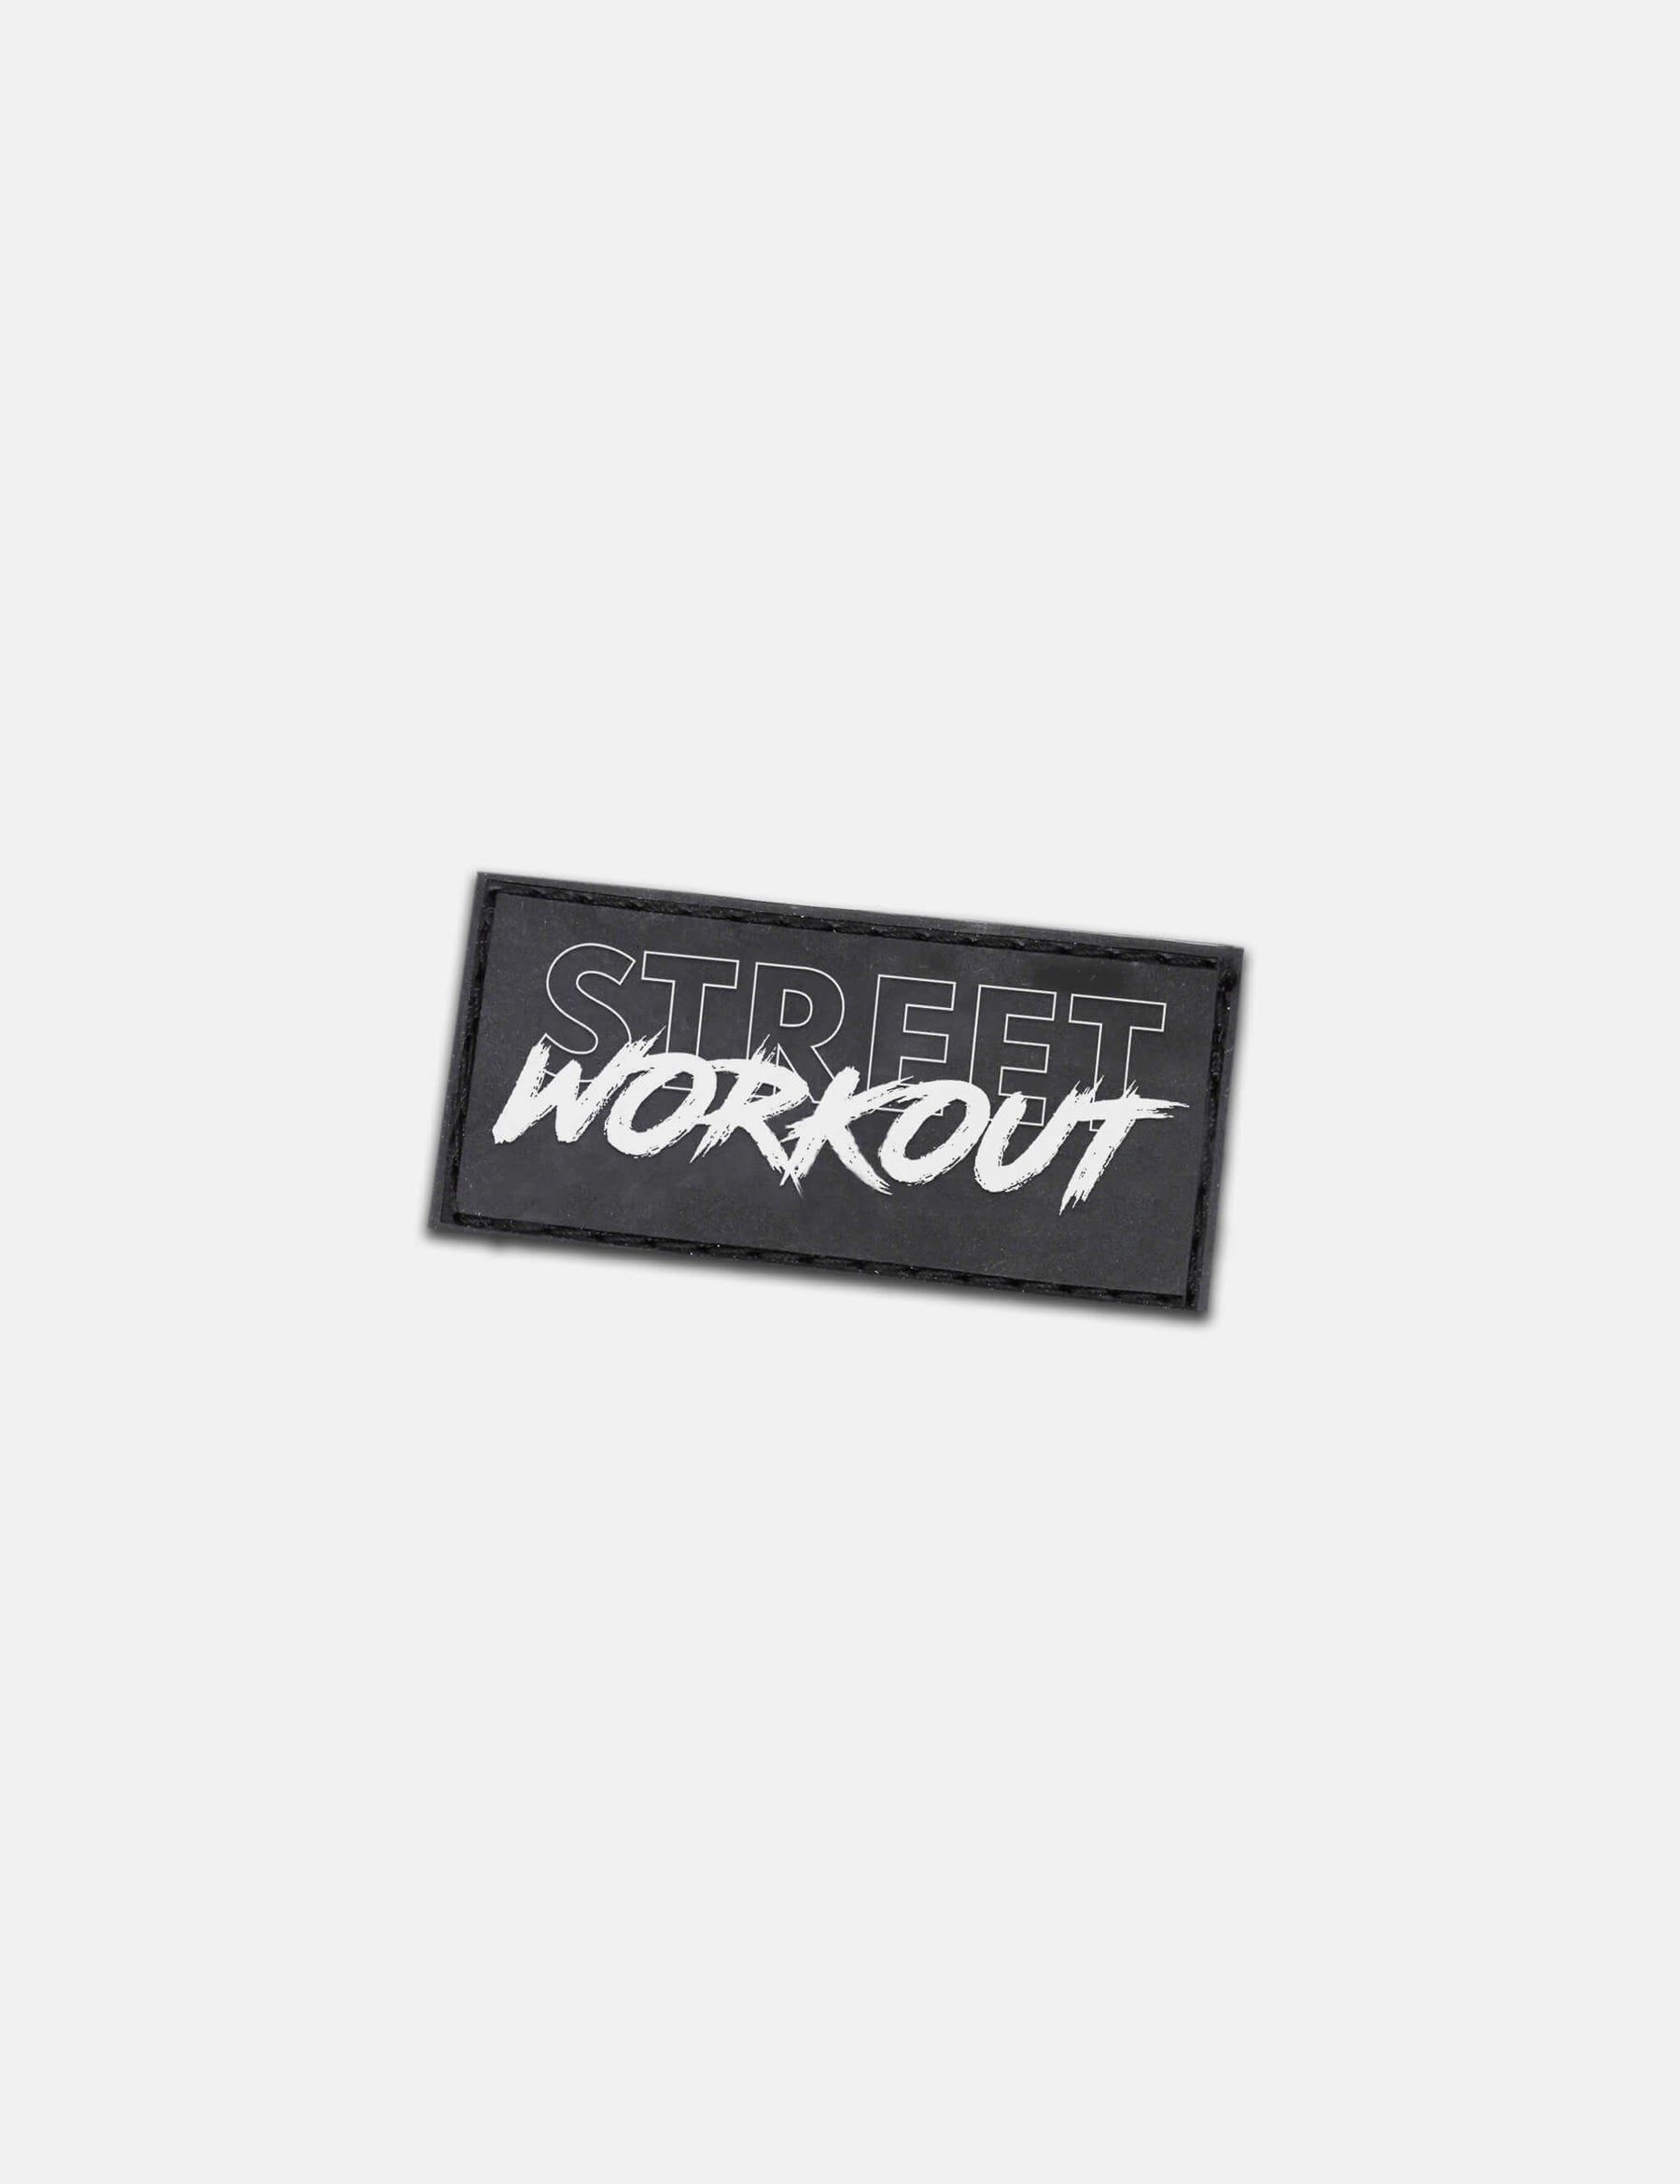 Street Workout' Sticker